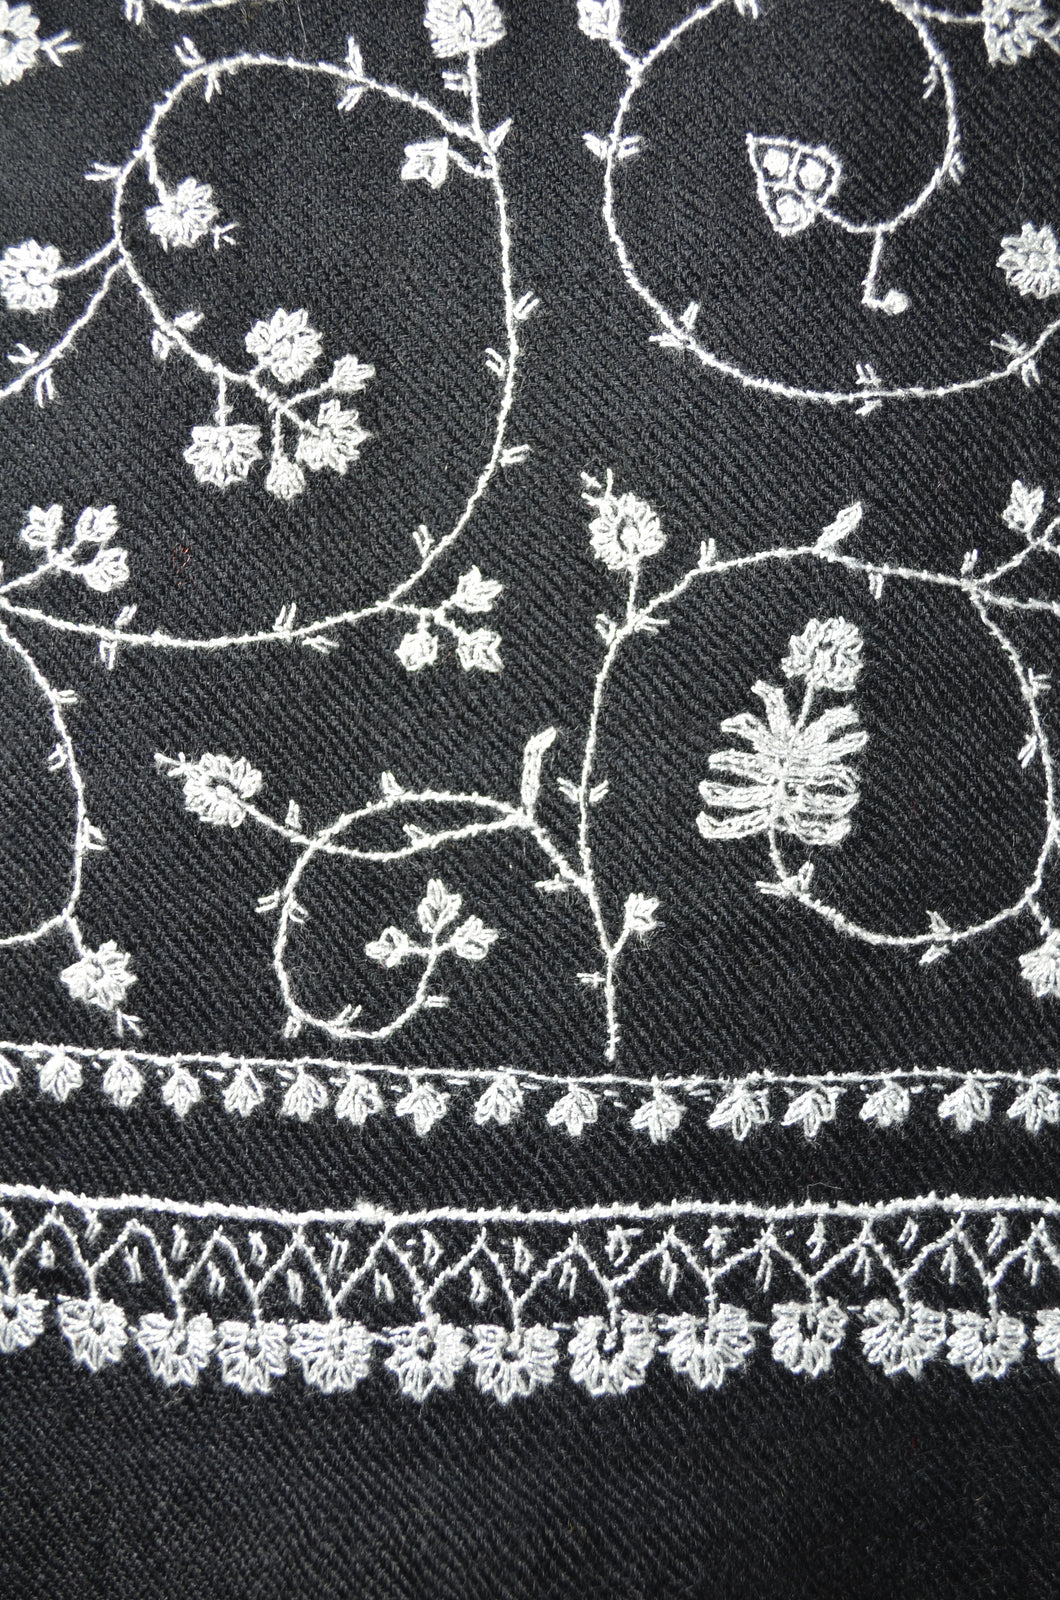 Black Jali Embroidery Cashmere Pashmina Scarf